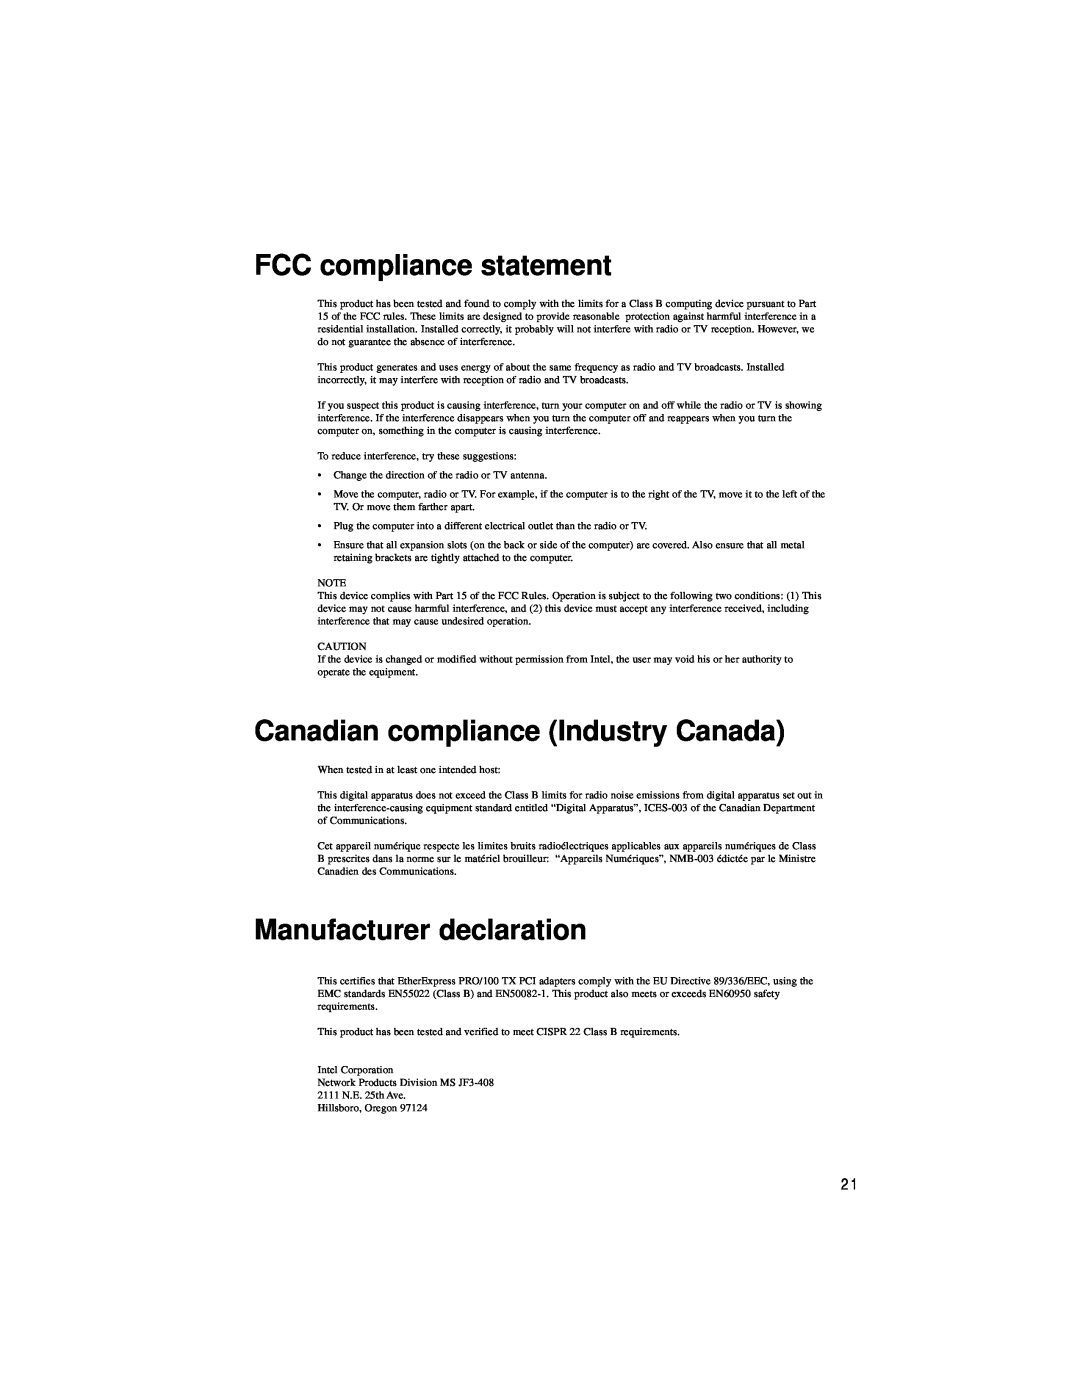 Intel PRO/100 TX PCI manual FCC compliance statement, Canadian compliance Industry Canada, Manufacturer declaration 